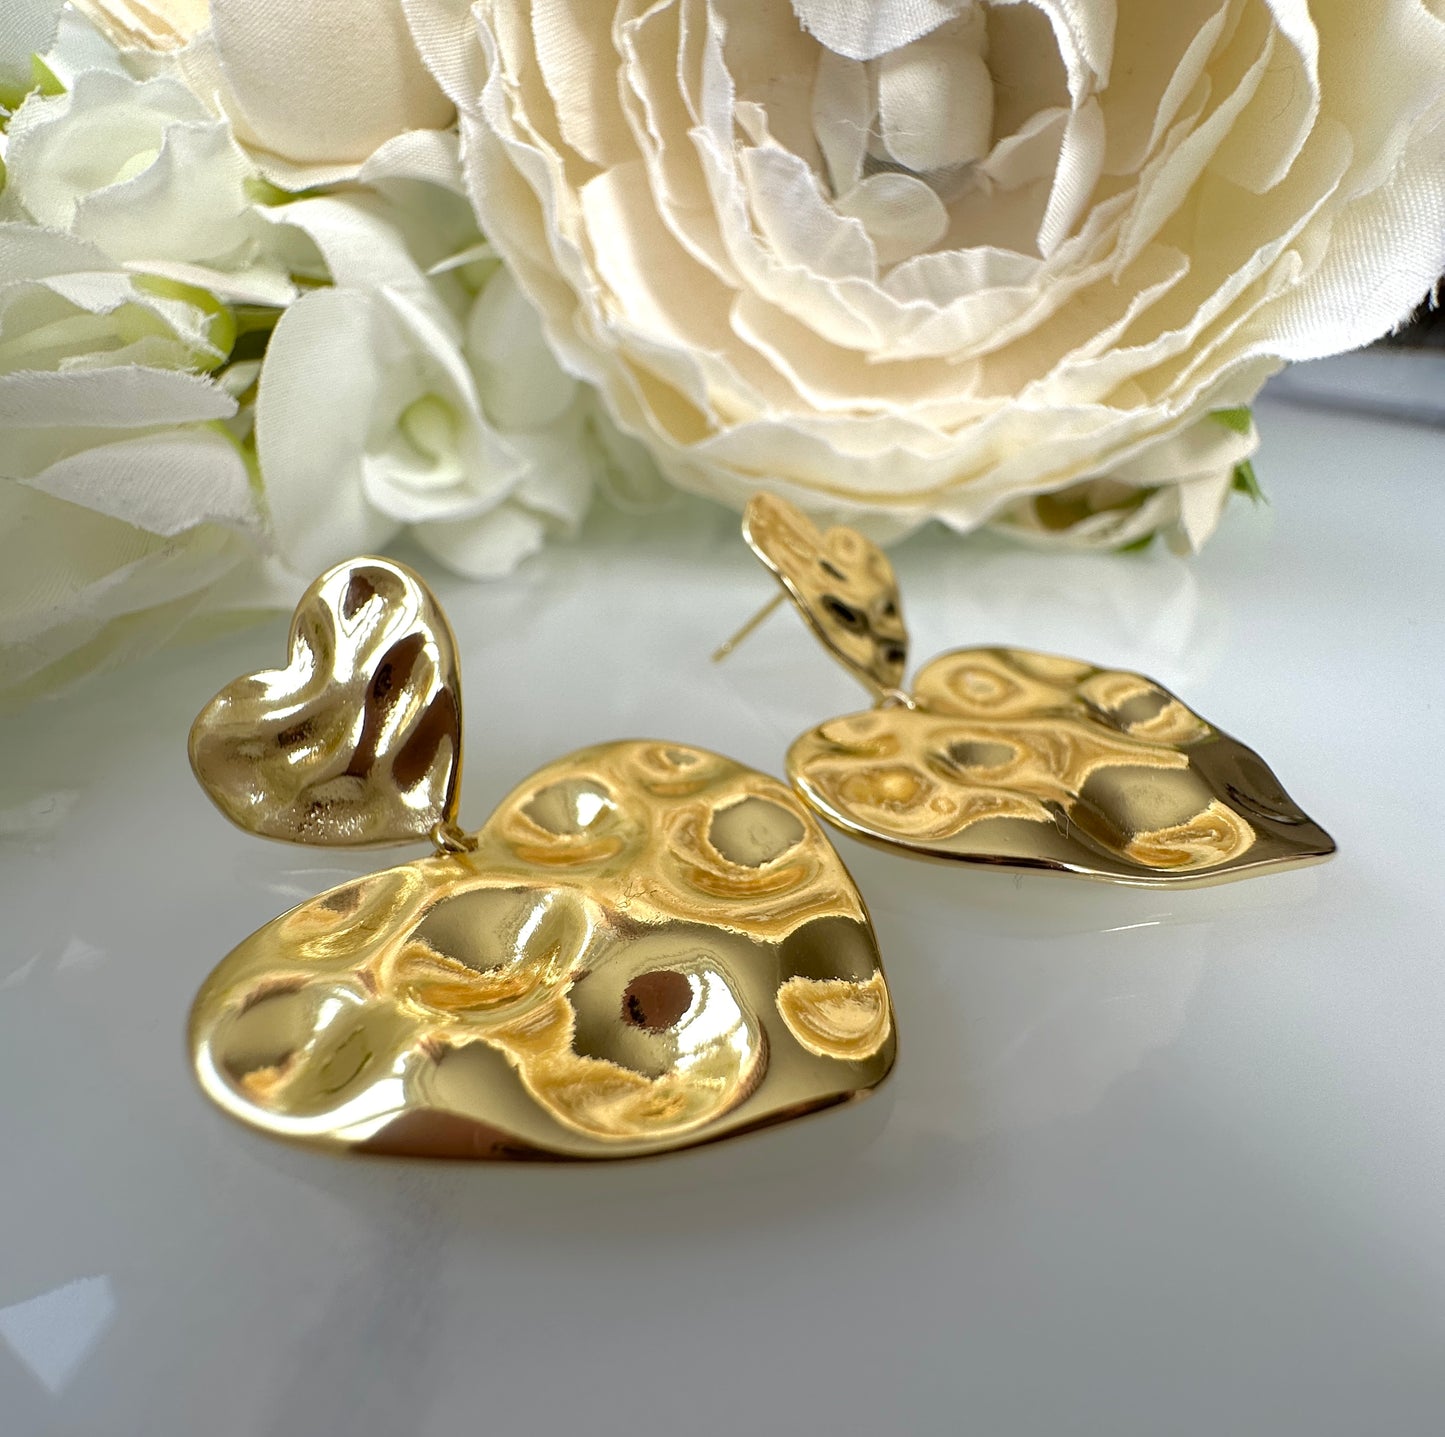 Gold hammered Heart Drop earrings.